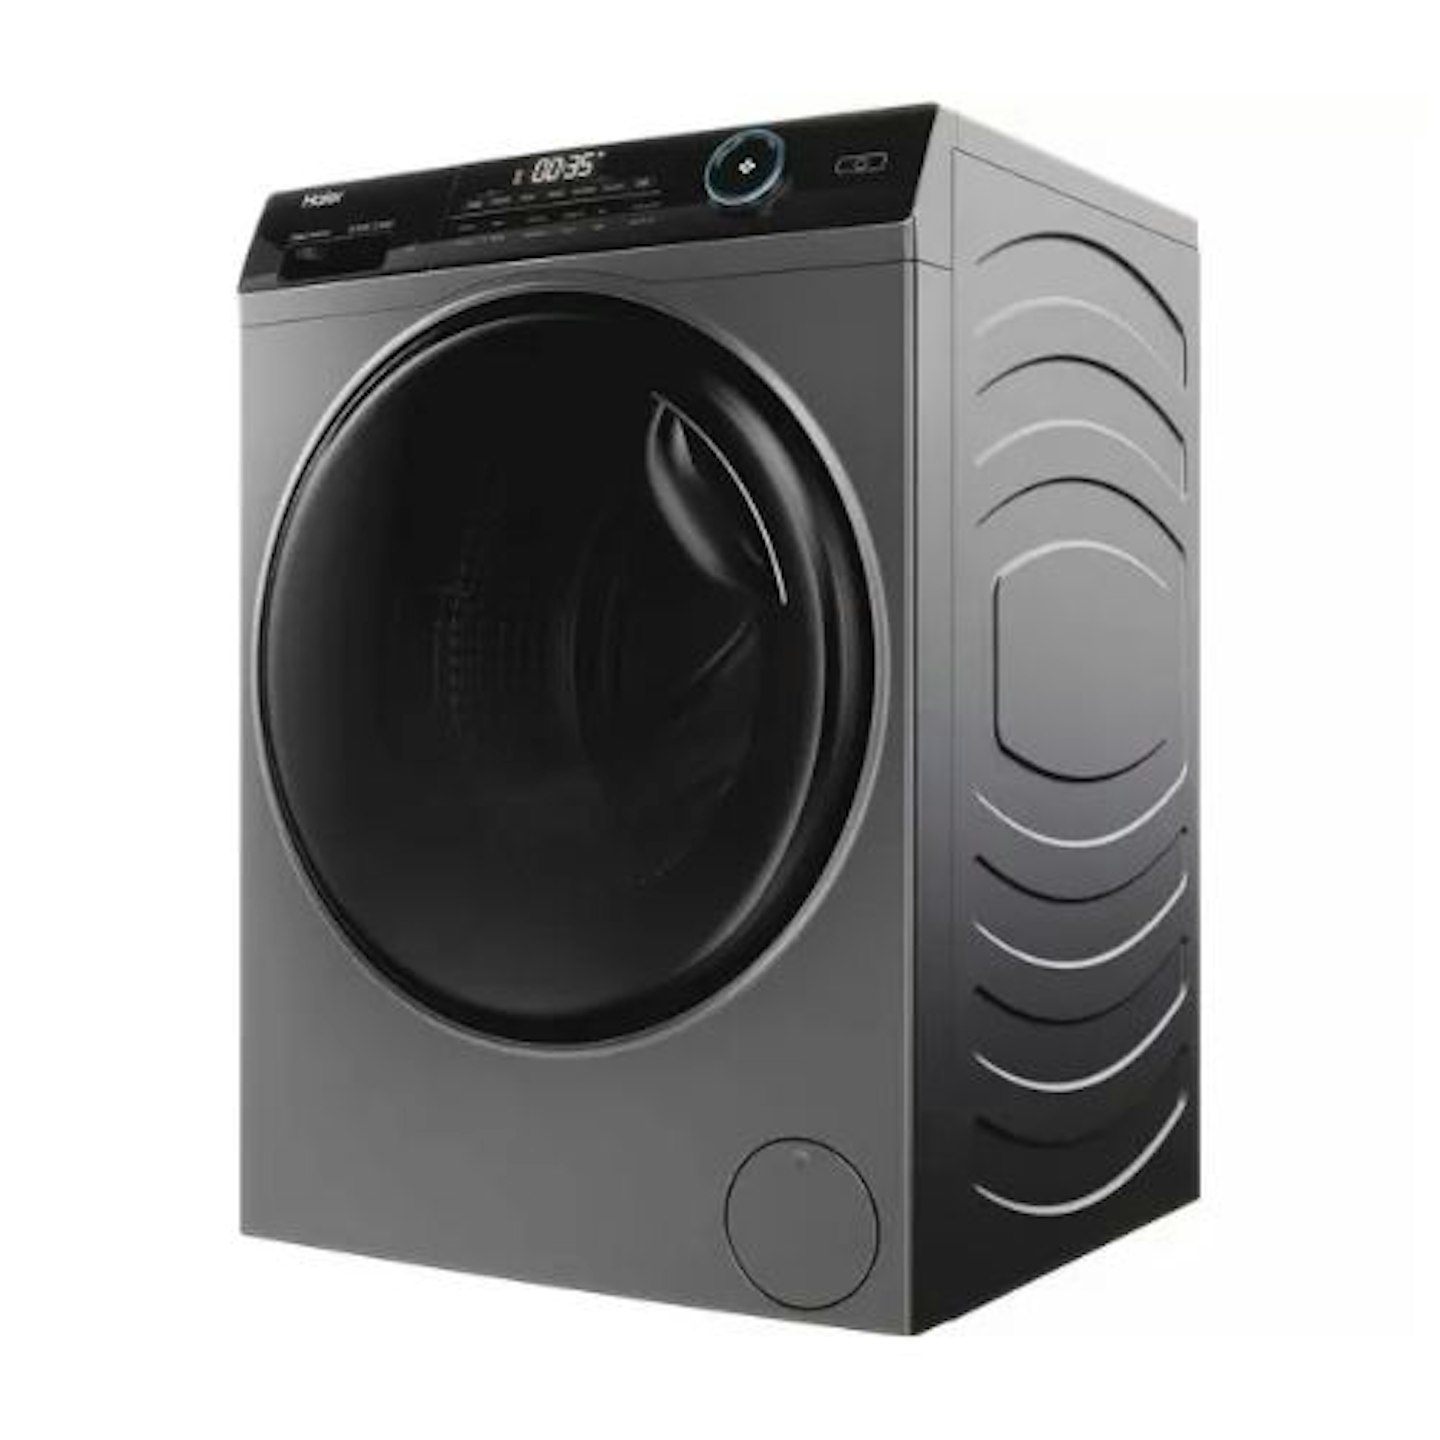 HAIER i-Pro Series 5 HWD90-B14959S8U1 WiFi-enabled 9 kg Washer Dryer